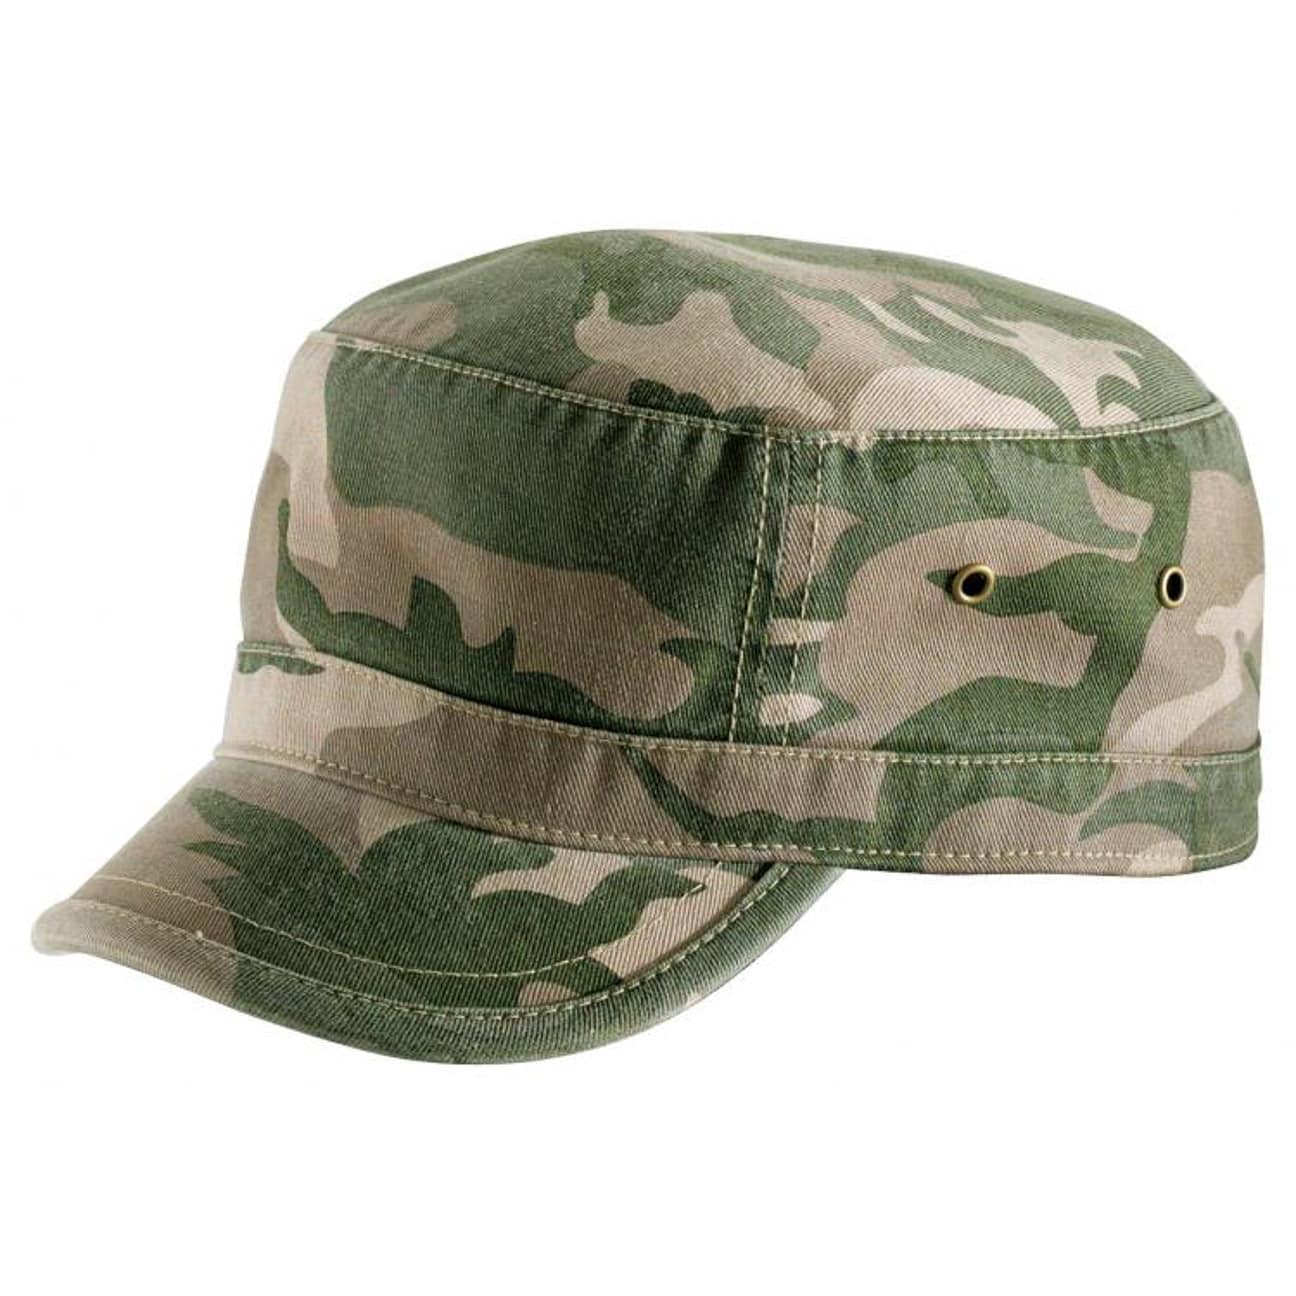 Kids Urban Army Cap, EUR 9,95 --> Hats, caps & beanies shop online ...